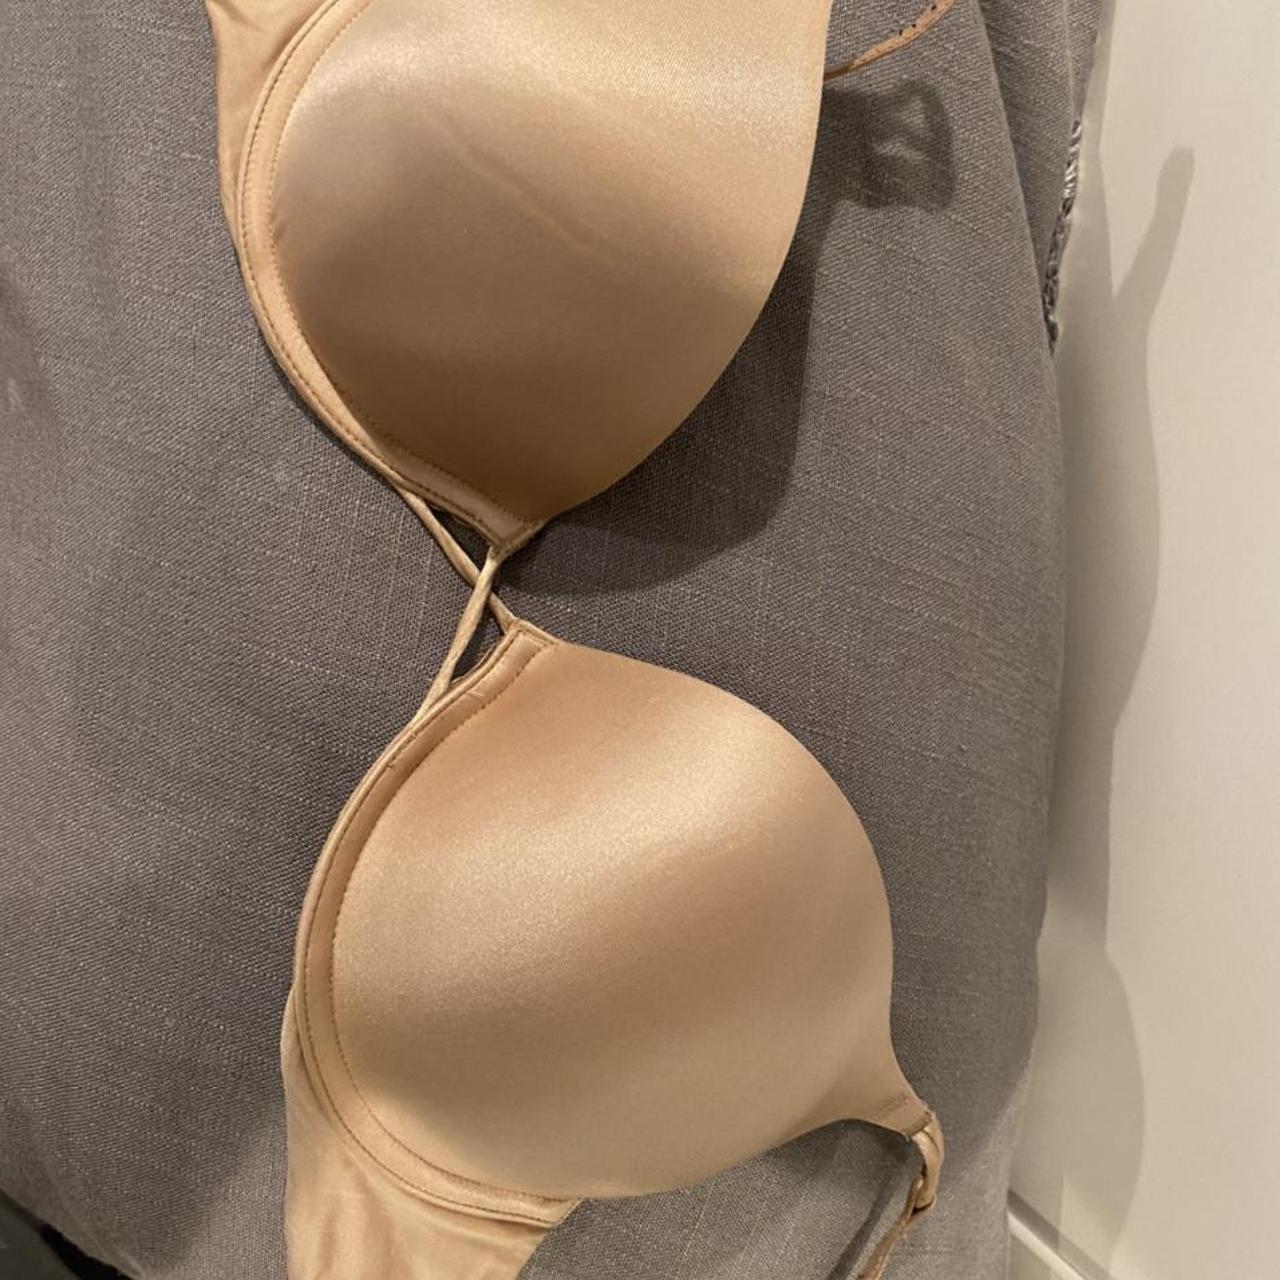 Victoria Secret Bombshell Bra in Nude Orignally: $58 - Depop